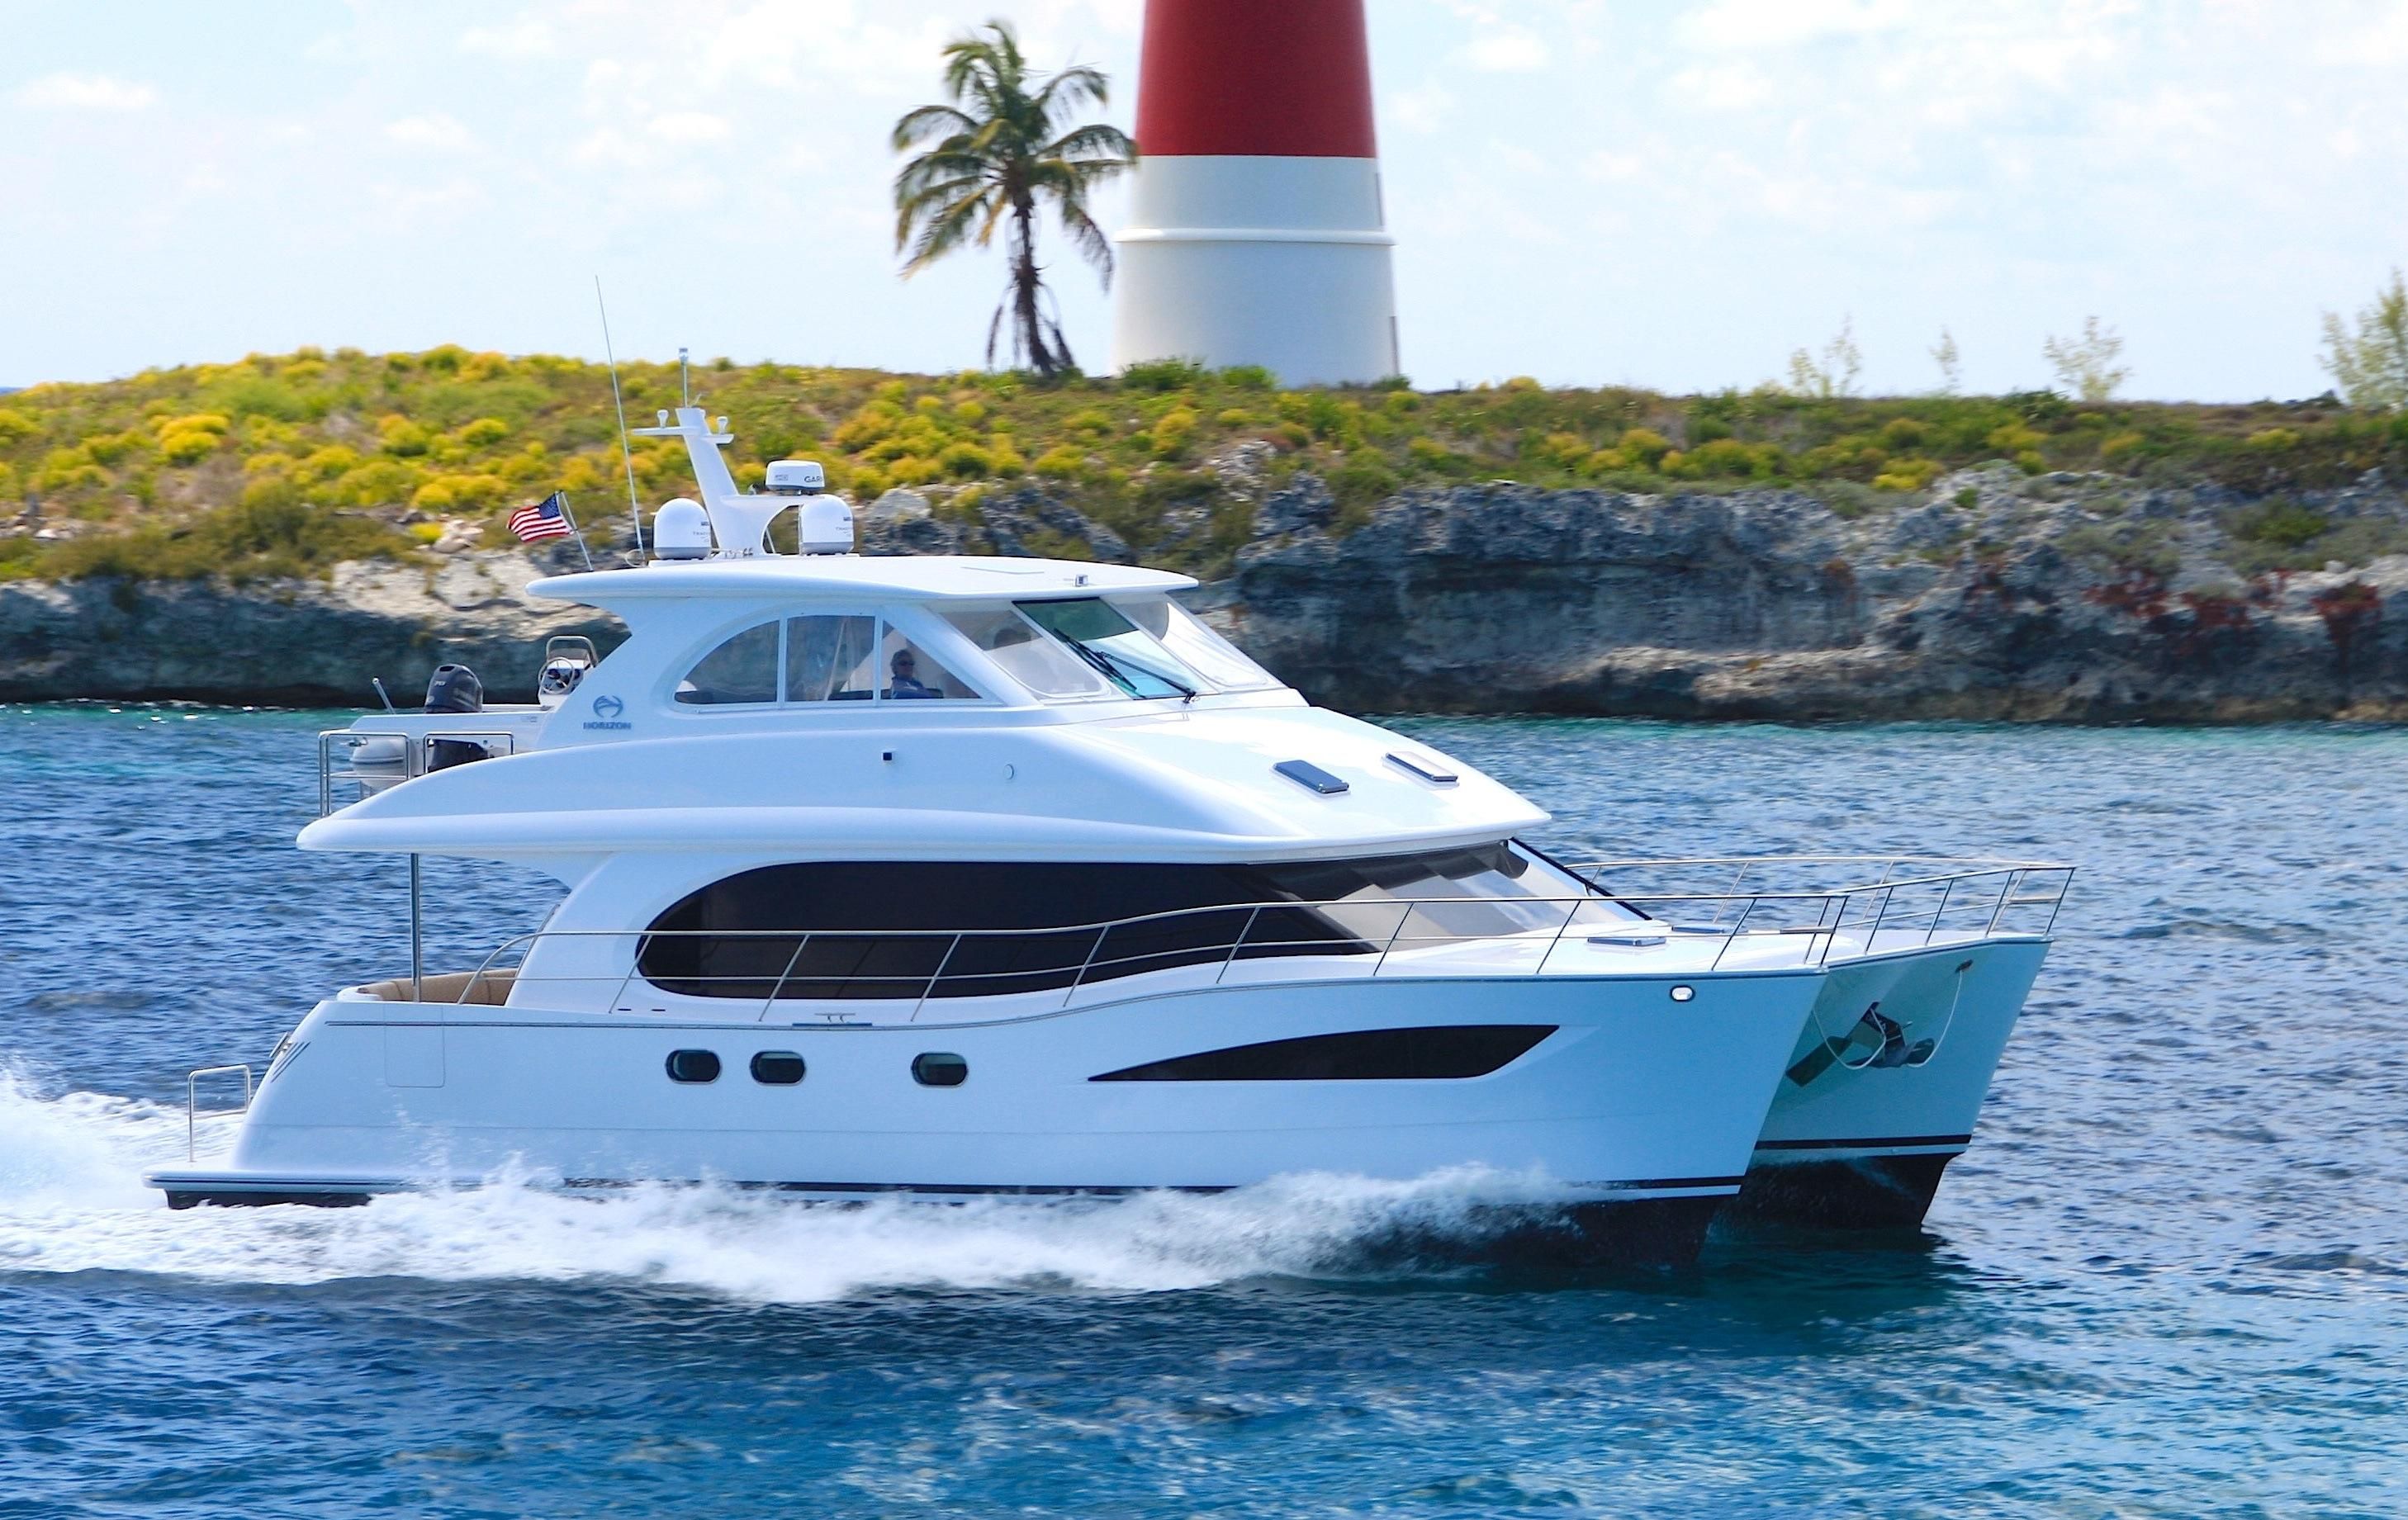 2019 Horizon PC52 Power Boat For Sale - www.yachtworld.com